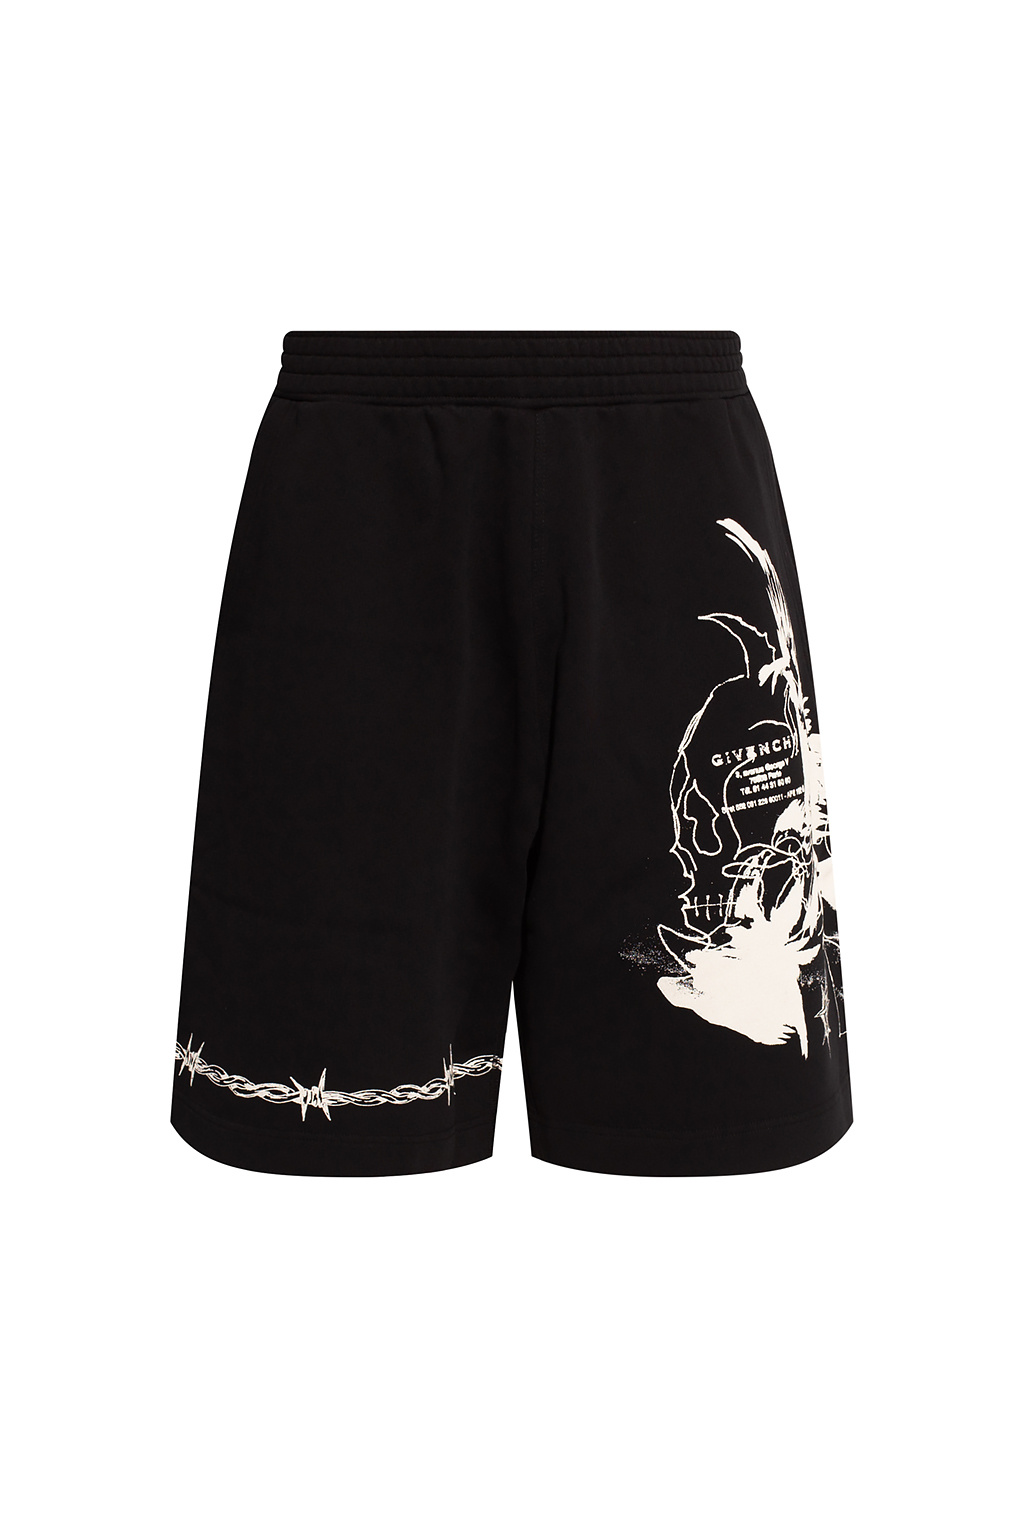 Givenchy Antigona padded crossbody bag - Black Printed shorts Givenchy -  InteragencyboardShops Italy